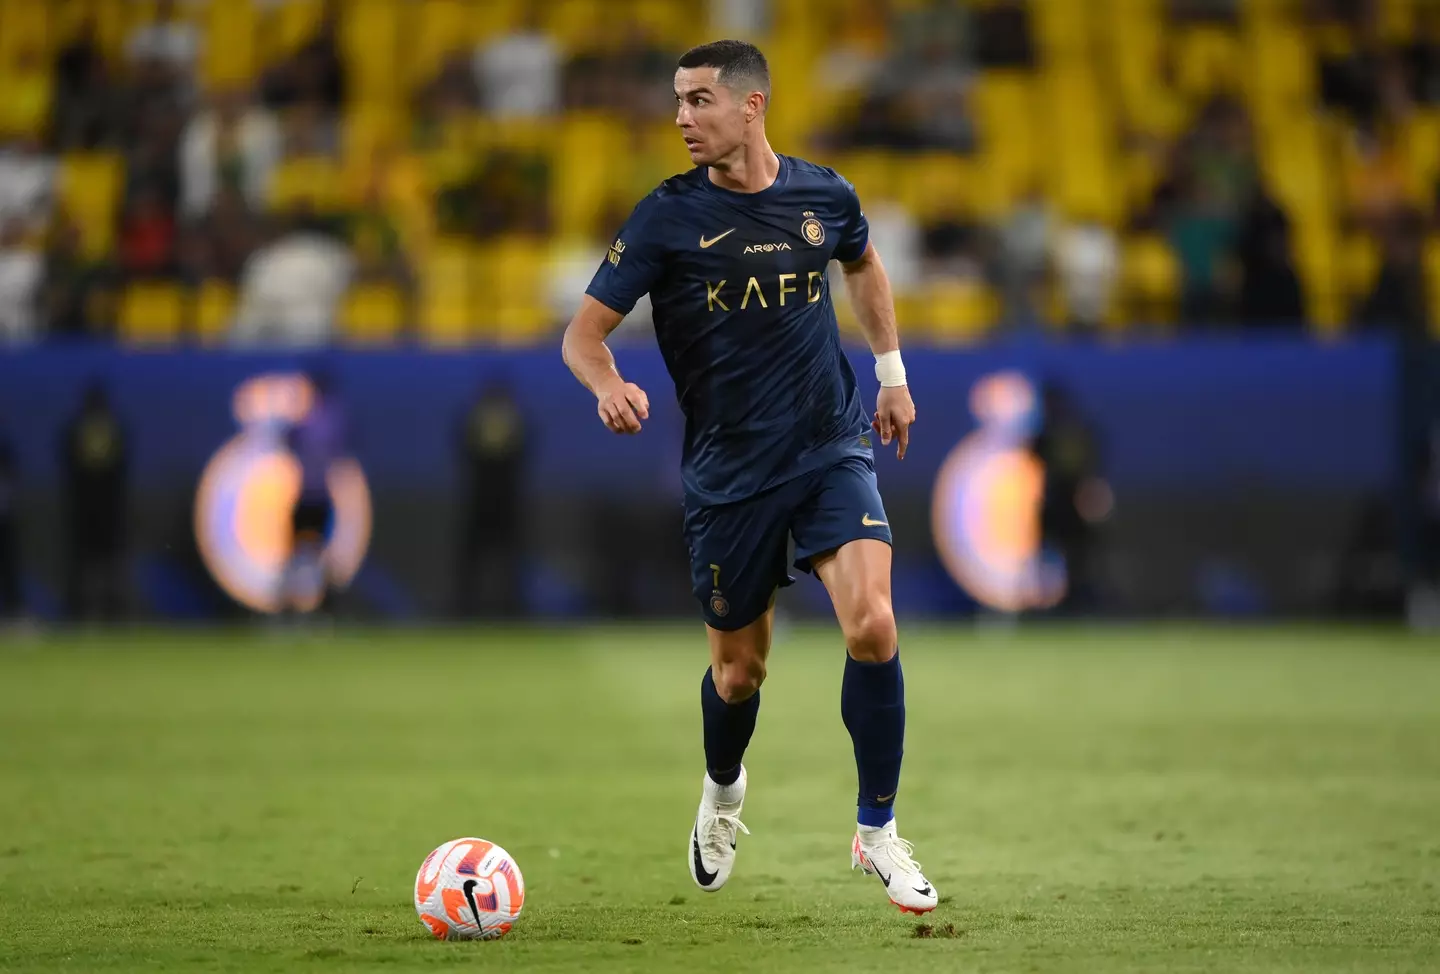 Ronaldo in action against Al Khaleej. (Image